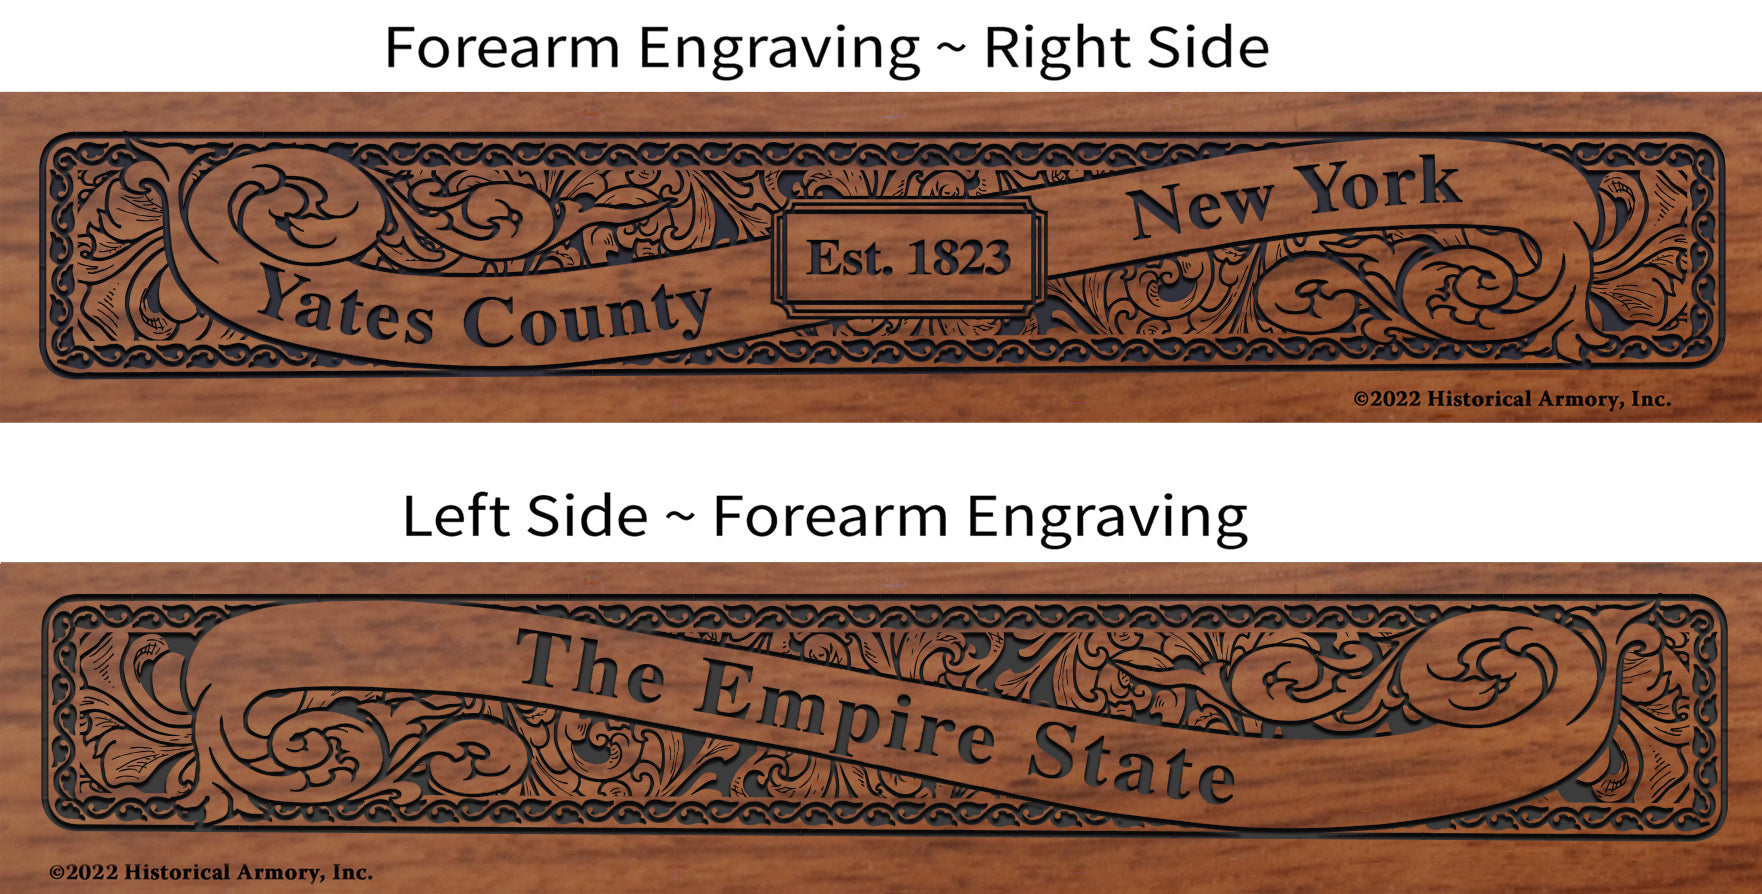 Yates County New York Engraved Rifle Forearm